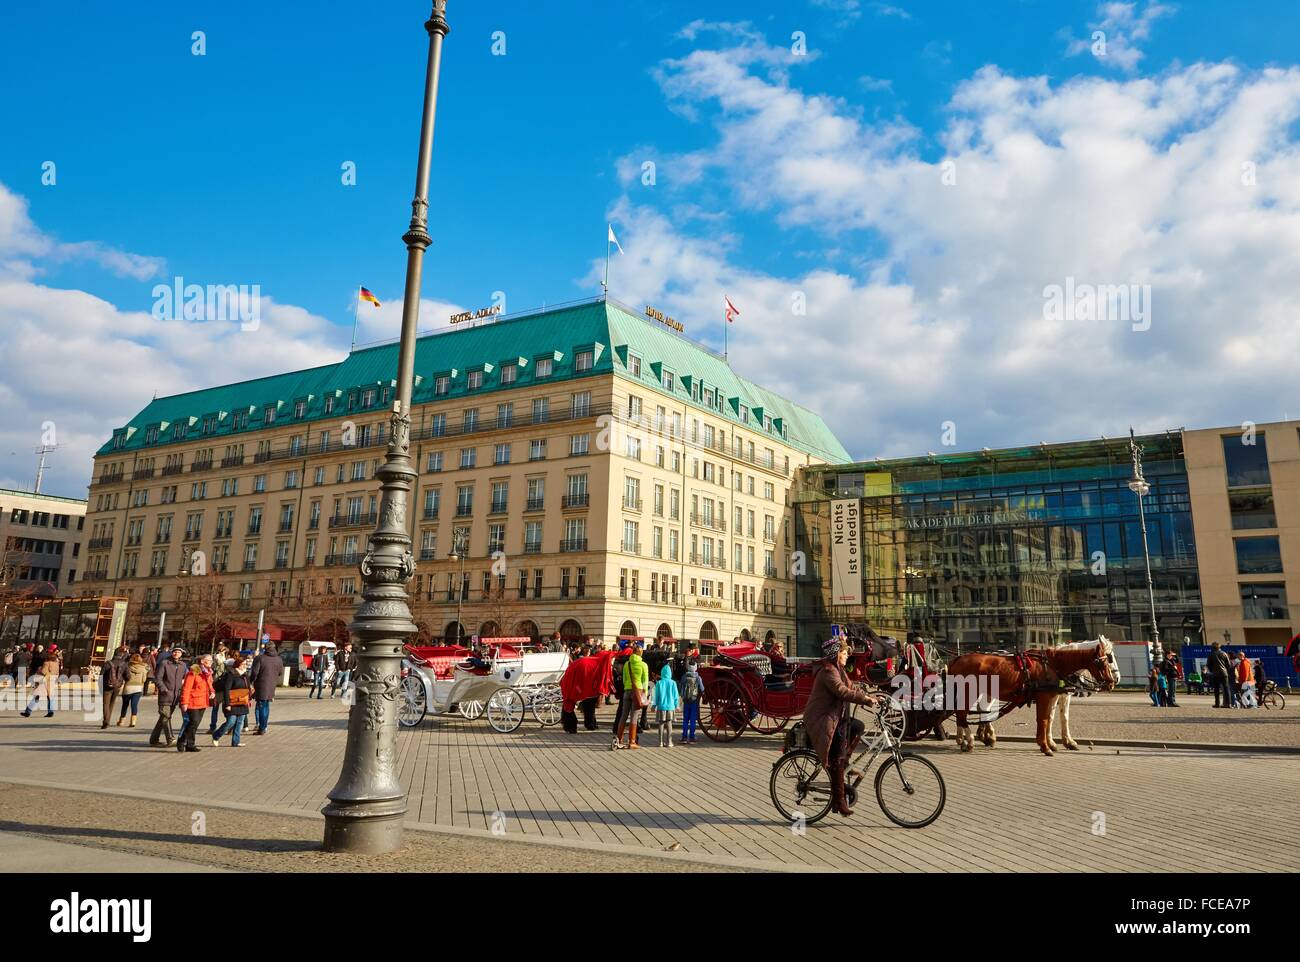 Hotel Adlon, Pariser Platz, Unter den Linden, Berlin, Germany Stock Photo